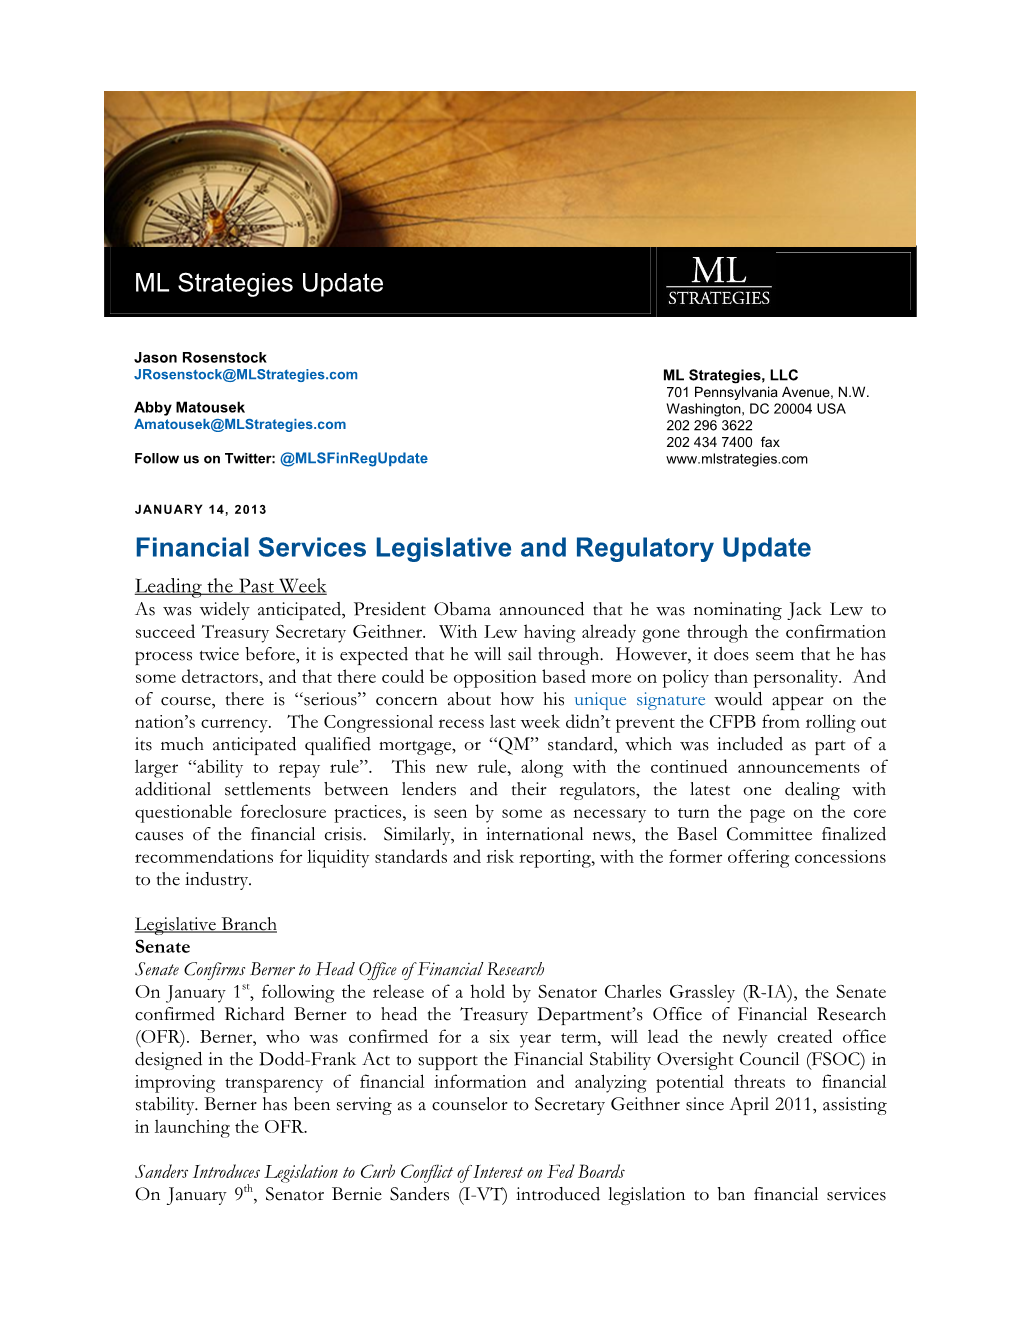 ML Strategies Update Financial Services Legislative and Regulatory Update